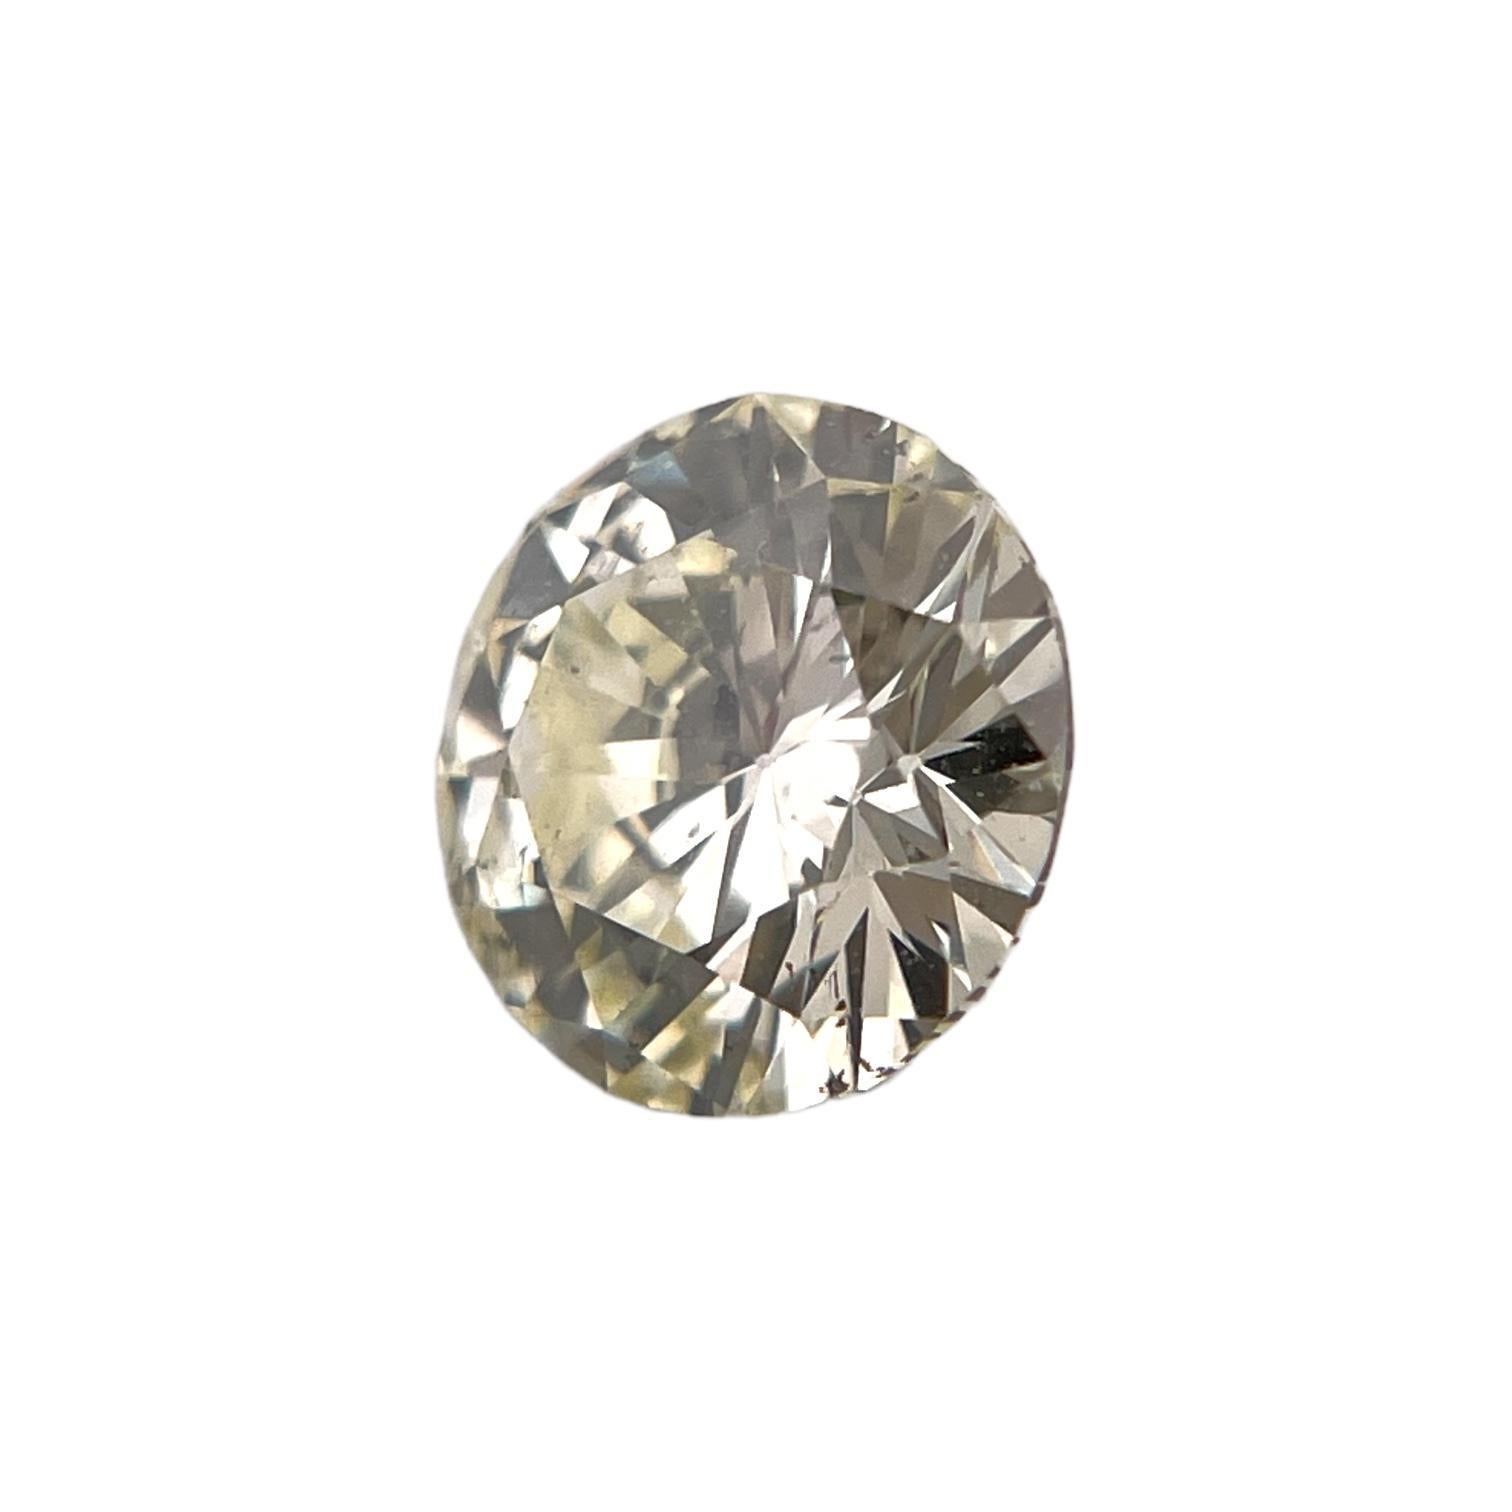 ITEM DESCRIPTION

ID #: NYC57829
Stone Shape: Round
Diamond Weight: 1.01Carat
Fancy Color: Q-R
Cut:	Brilliant
Measurements: 6.57 x 6.64 x 3.70 mm
Symmetry: Good
Polish: Good
Fluorescence: Faint
Certifying Lab: GIA
GIA Certificate #: